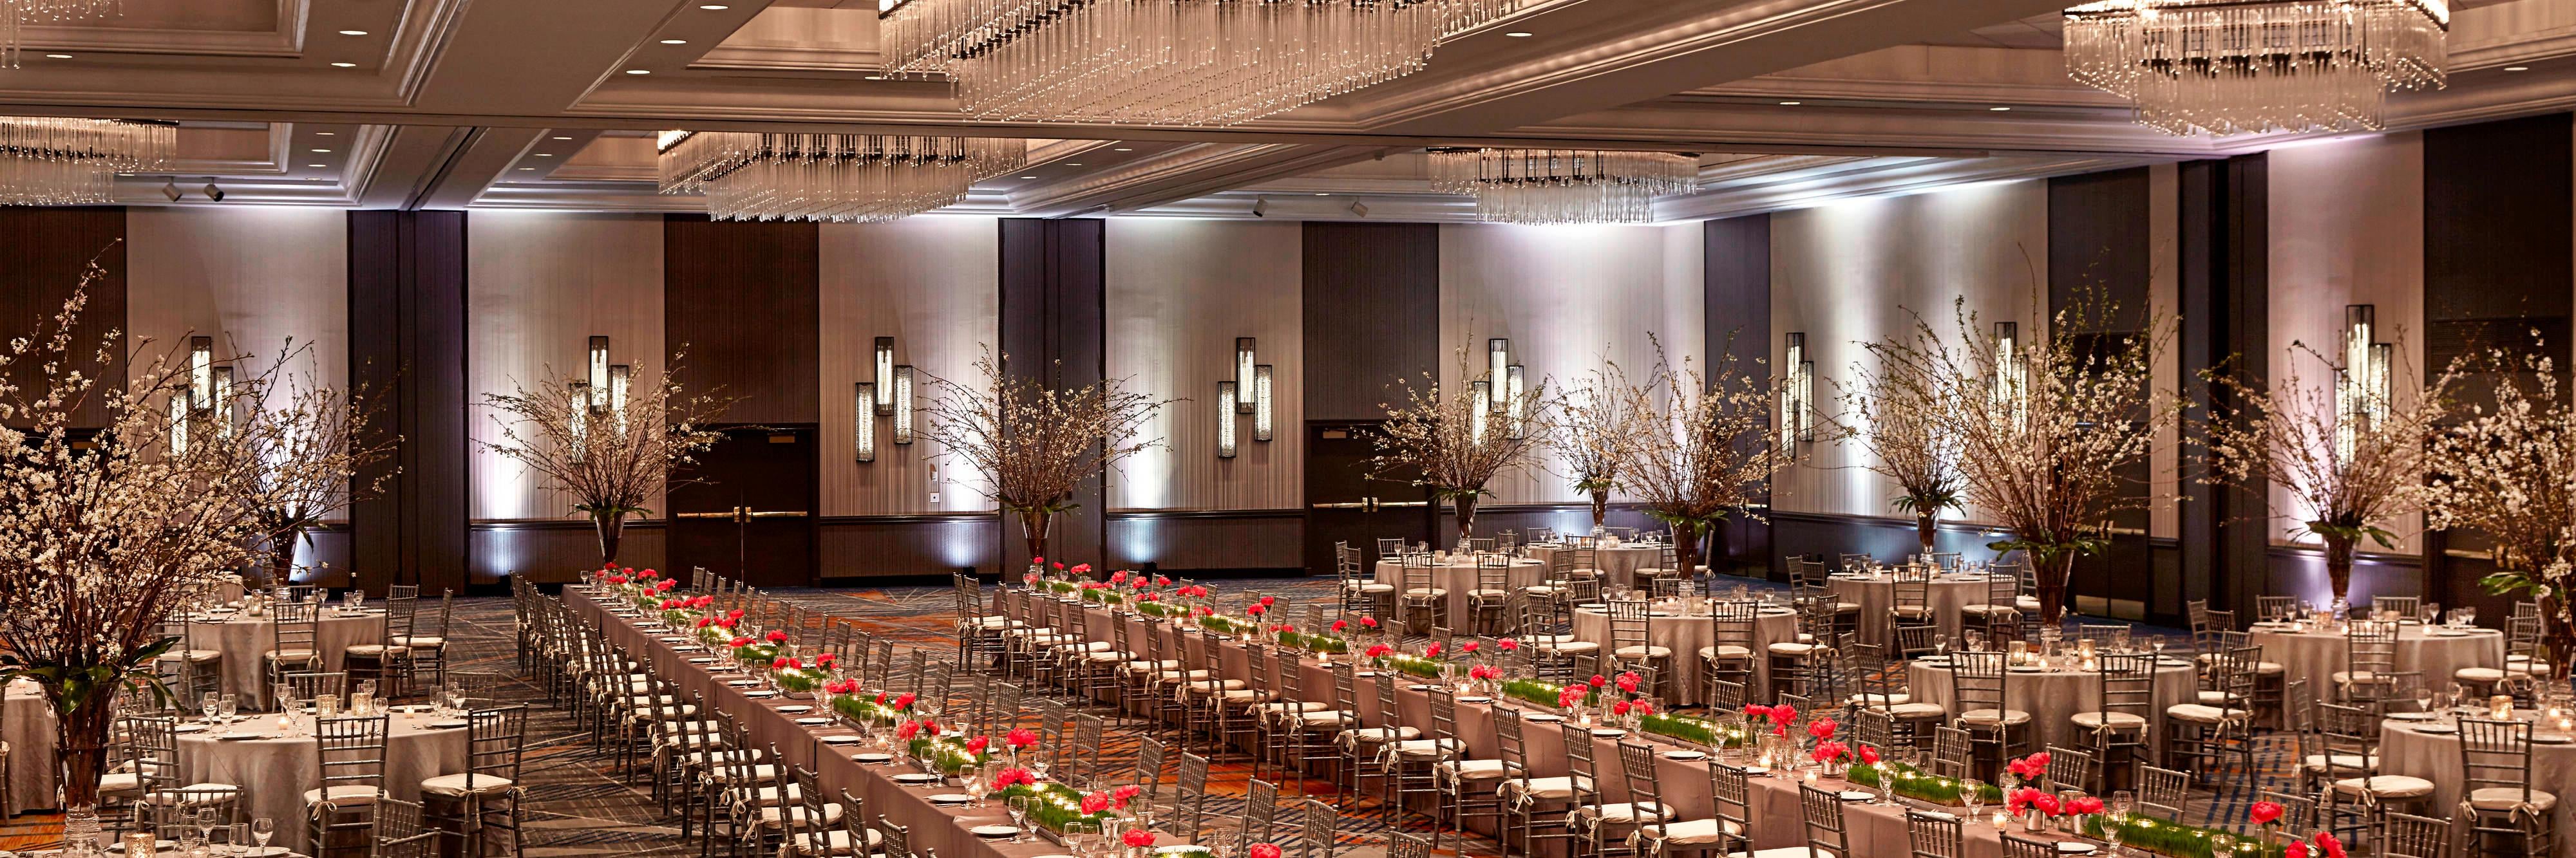 Ballroom wedding reception setup